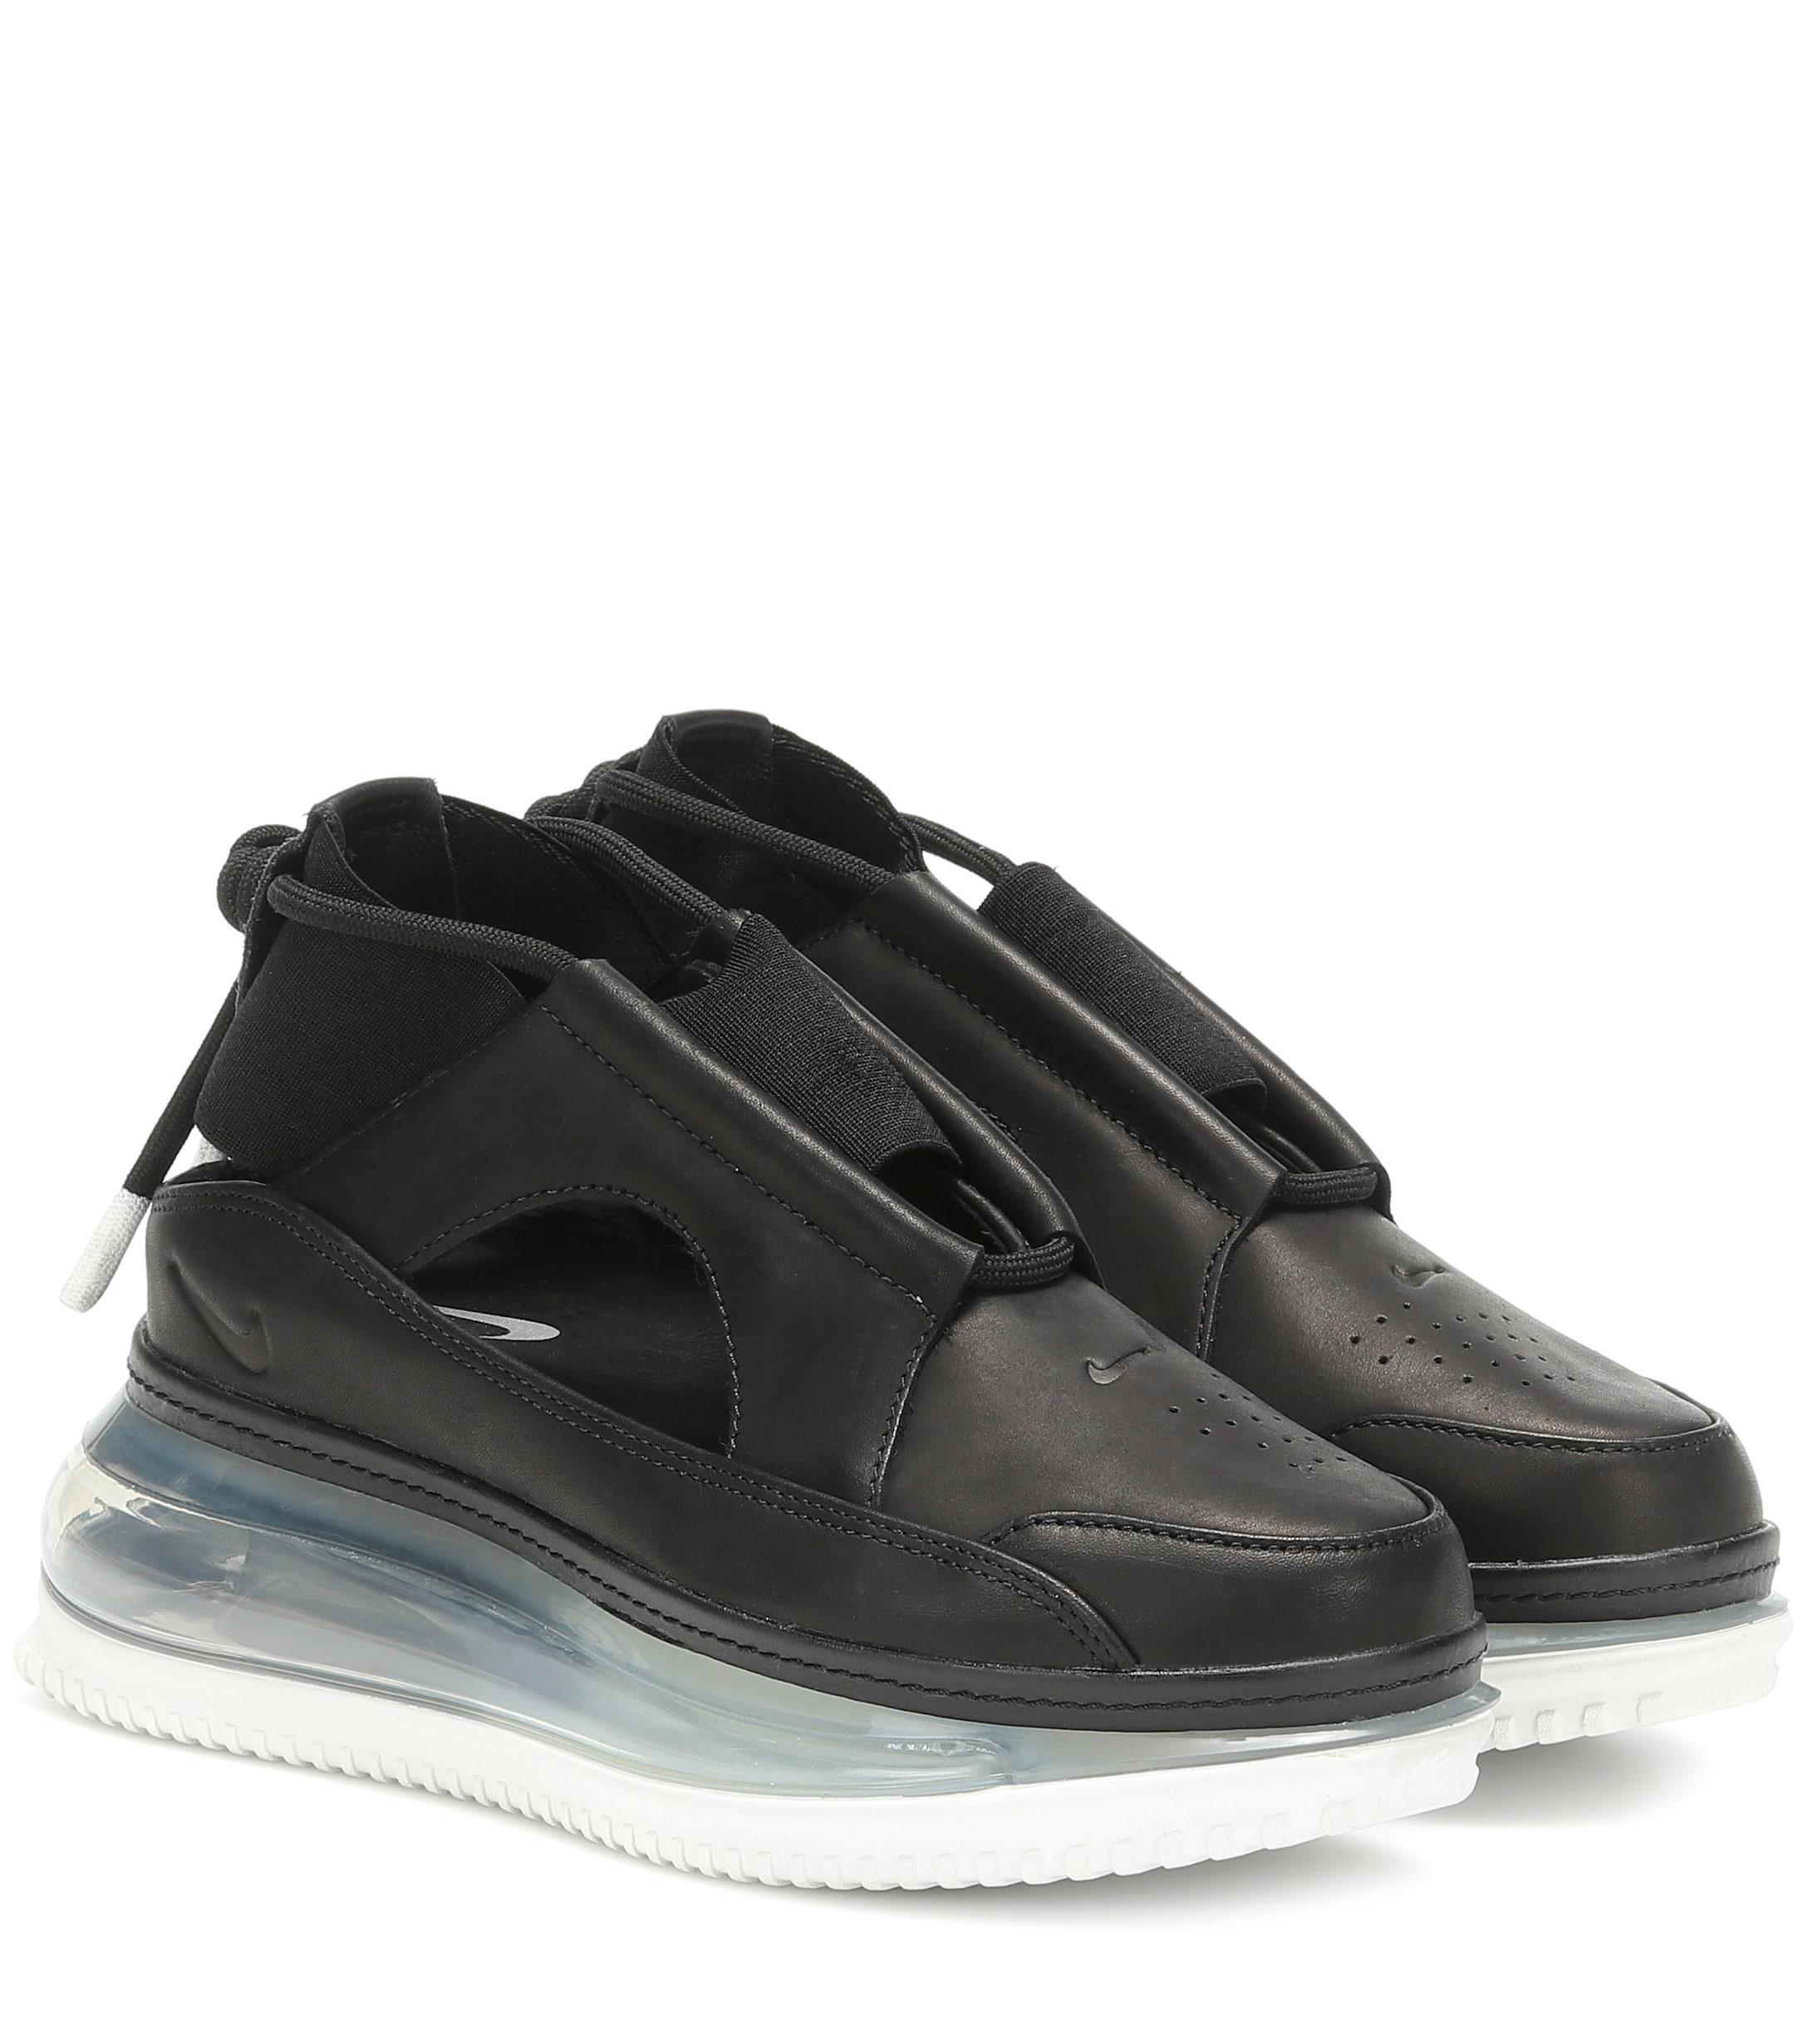 Nike Max 720 Leather Sneaker in Black Lyst UK